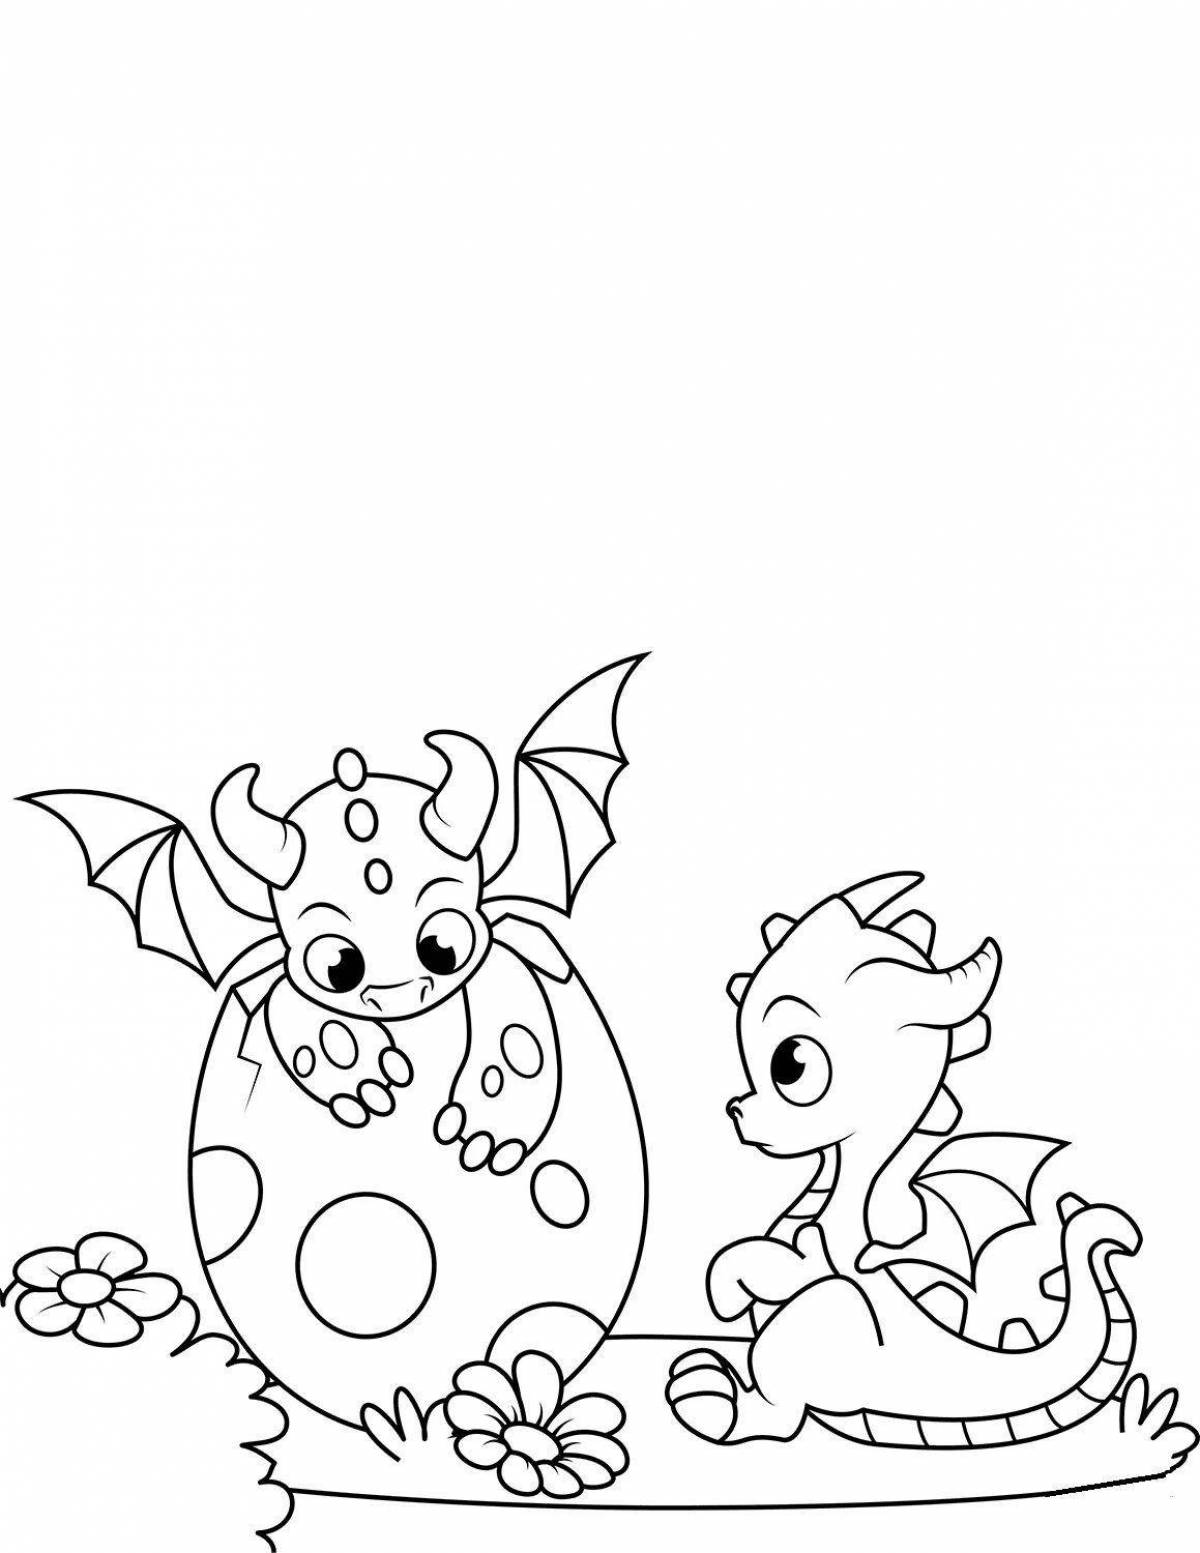 Amazing cute dragon coloring book